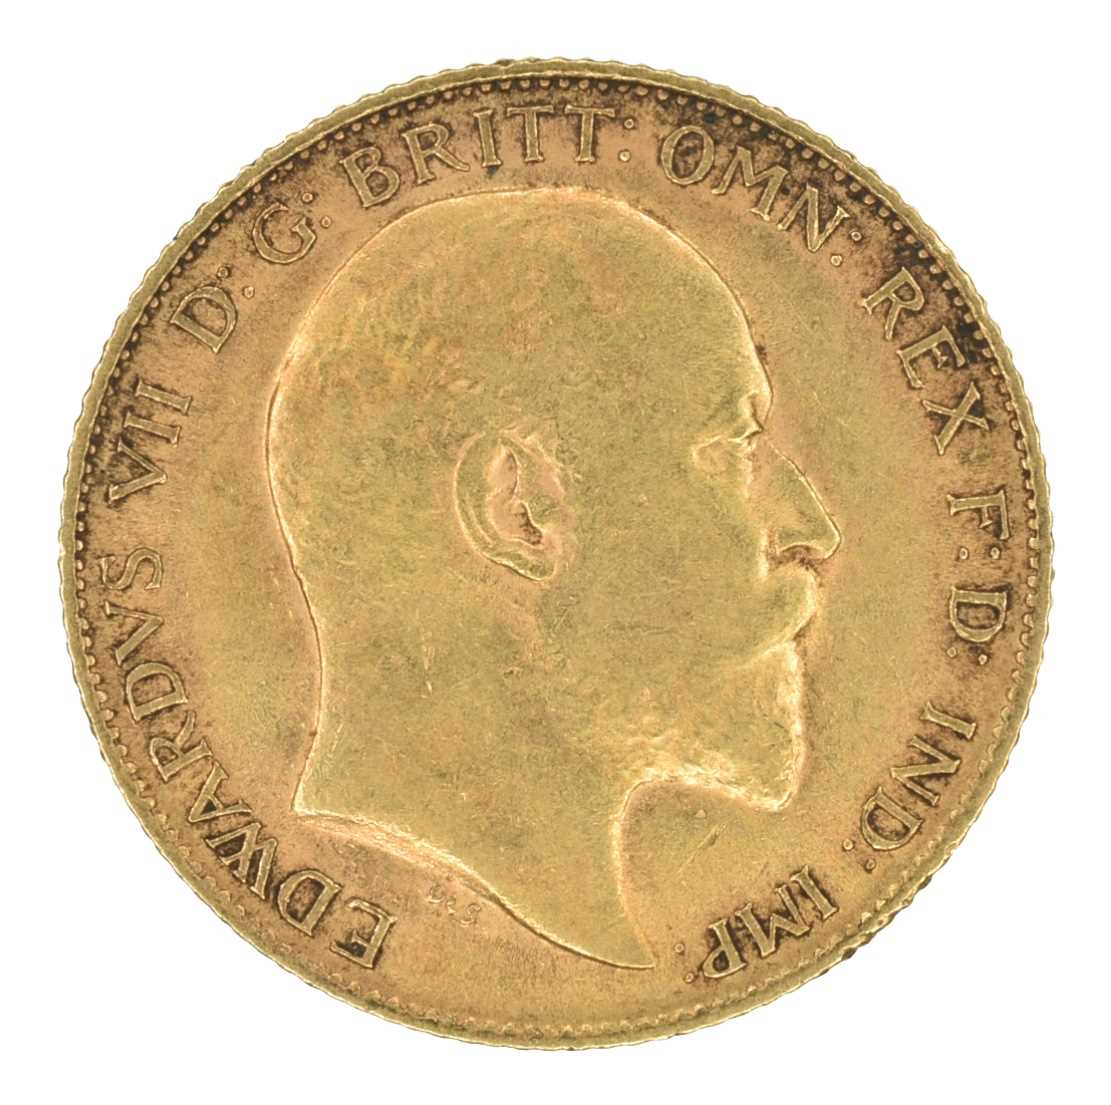 Lot 123 - King Edward VII, Half-Sovereign, 1908, London Mint.